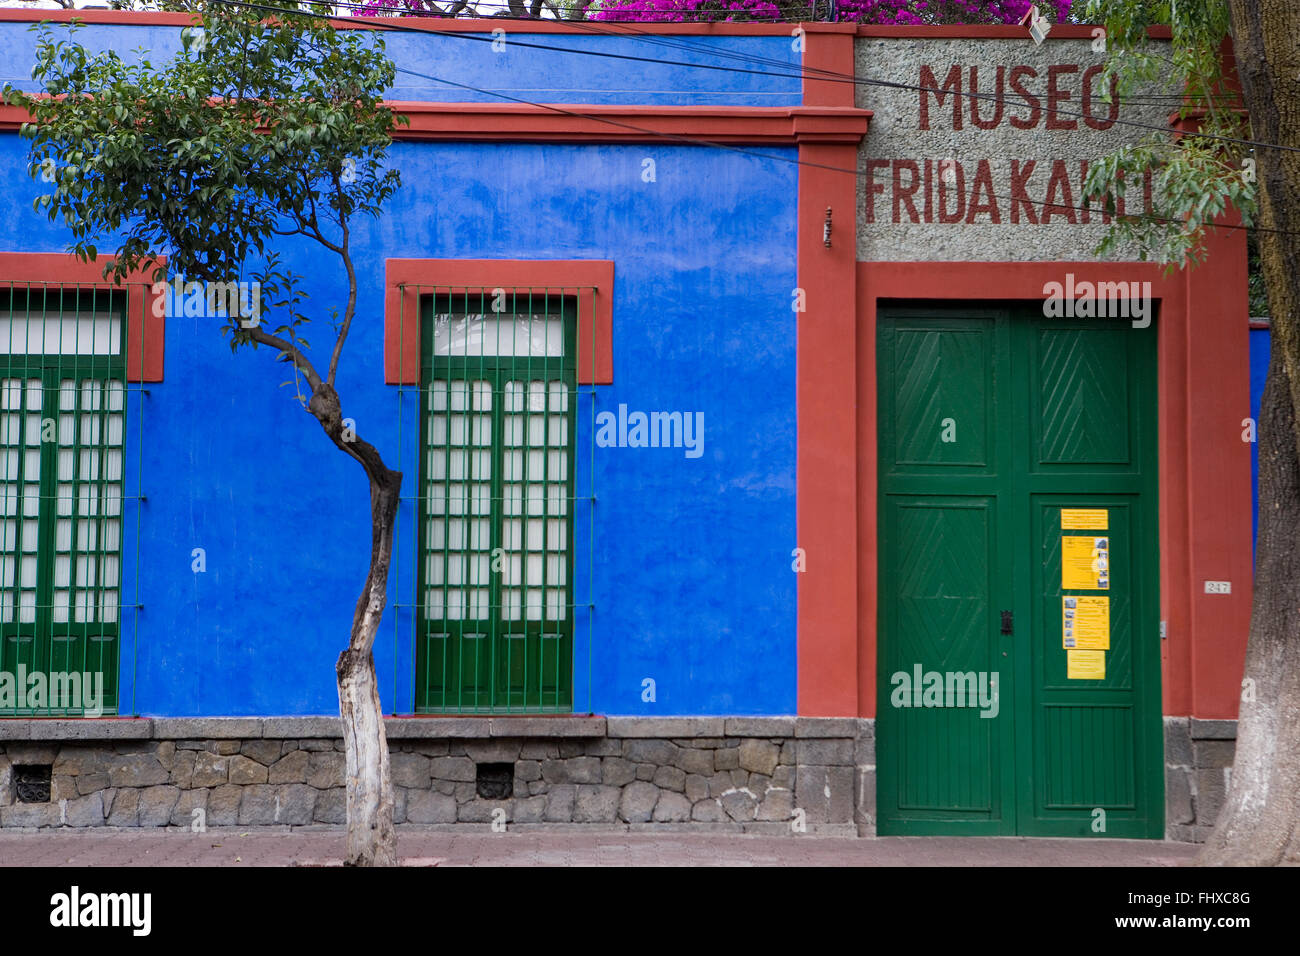 Mexico, Mexico City, Museo Frida Kahlo, facade with entrance to museum Stock Photo